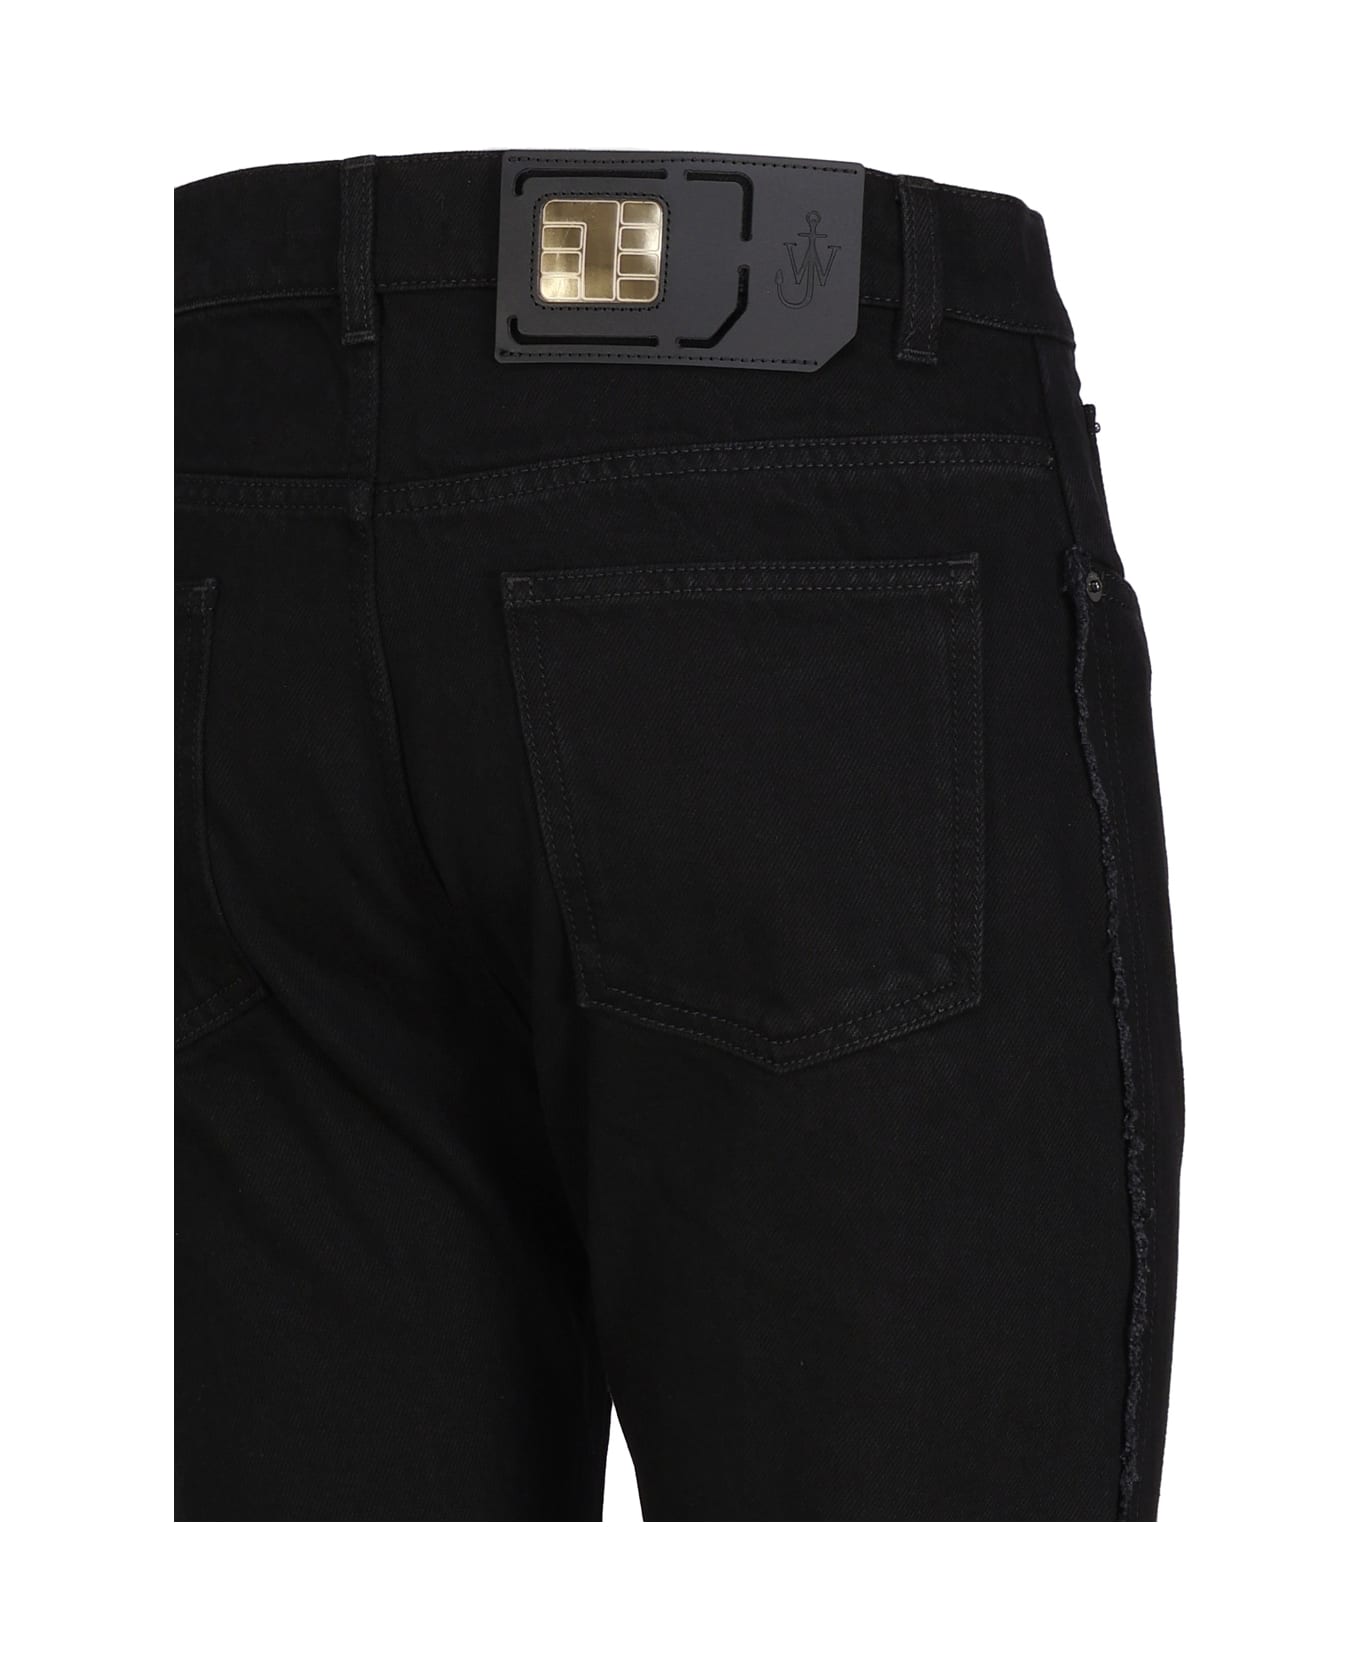 J.W. Anderson Black Denim Jeans - Black